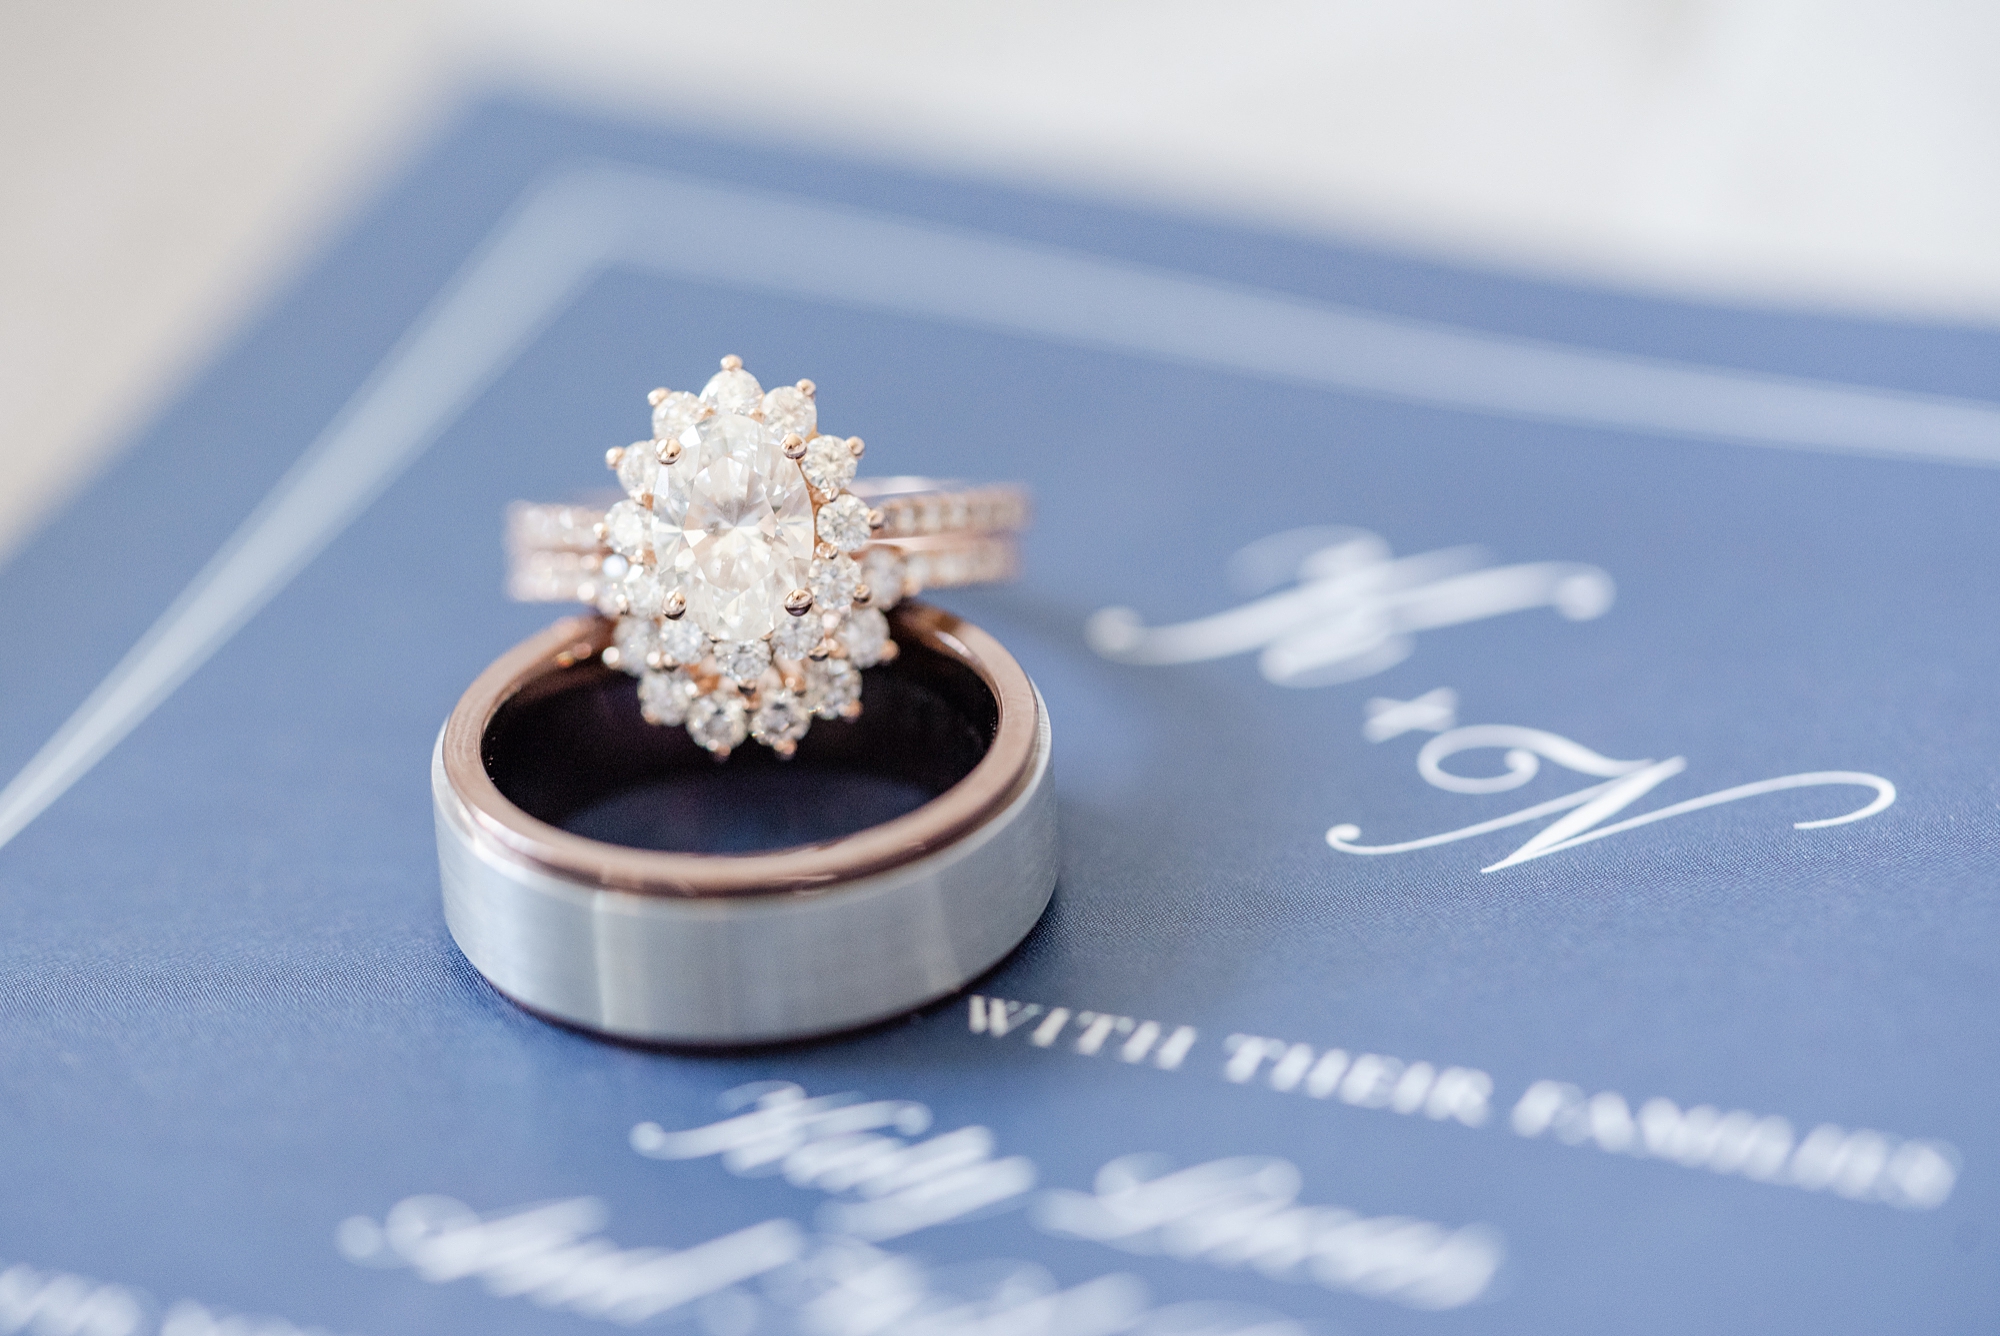 bride and groom's wedding rings sit on blue invitation